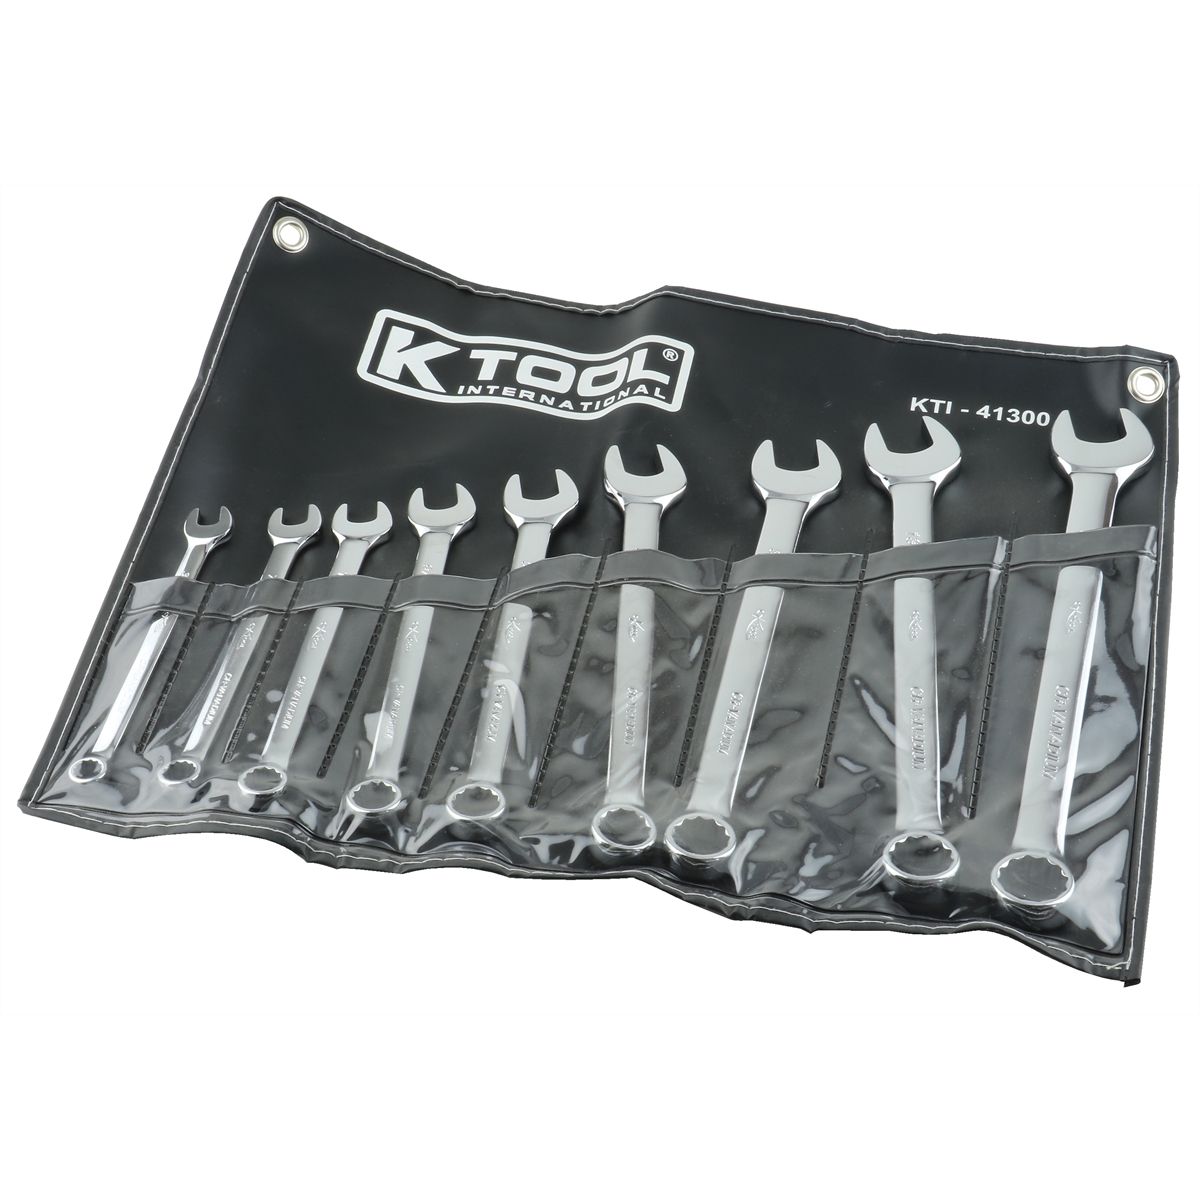 High Polish Combination Wrench Set w/ Kit Bag - 9 Pc